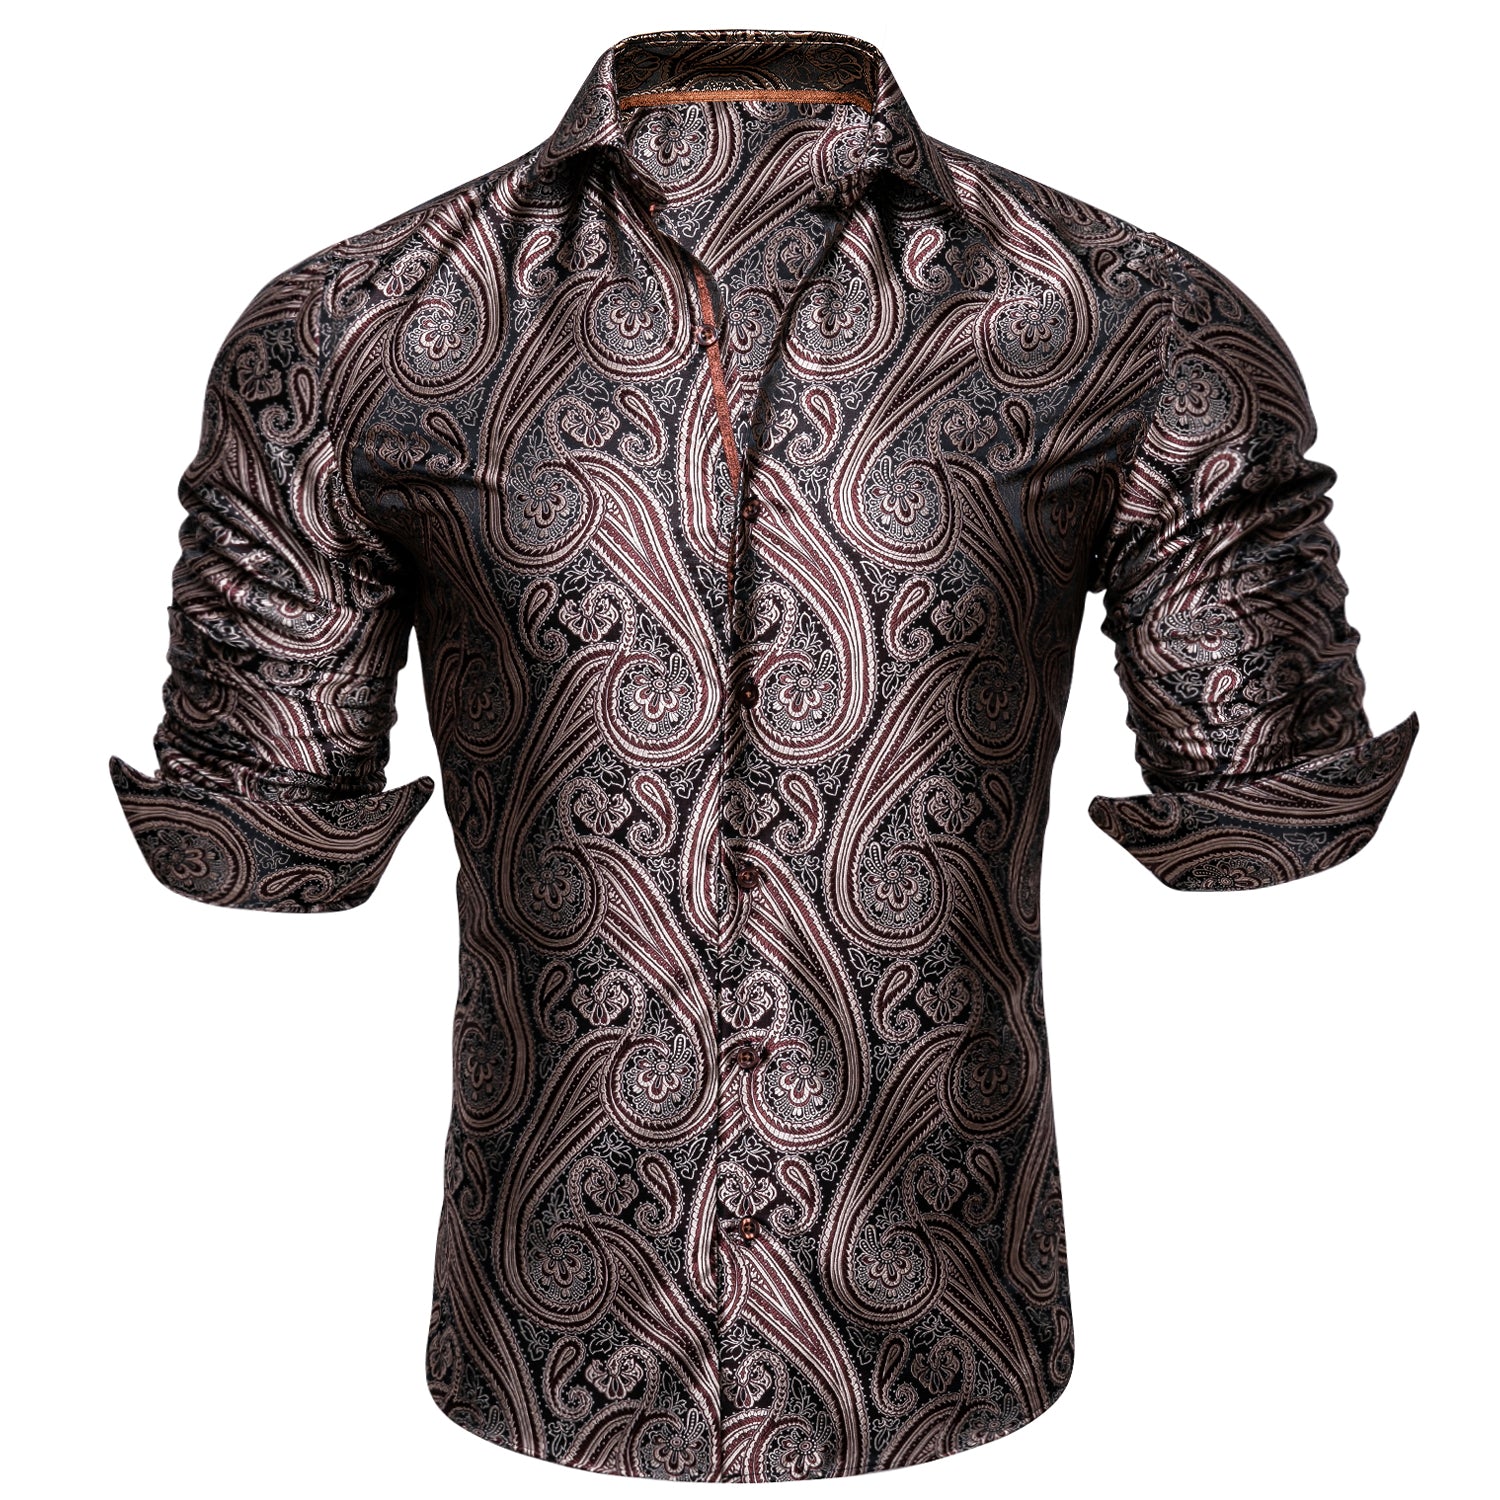 Barry.wang New Brown Black Silk Paisley Tribal Long Sleeve Daily Tops Men's Shirt